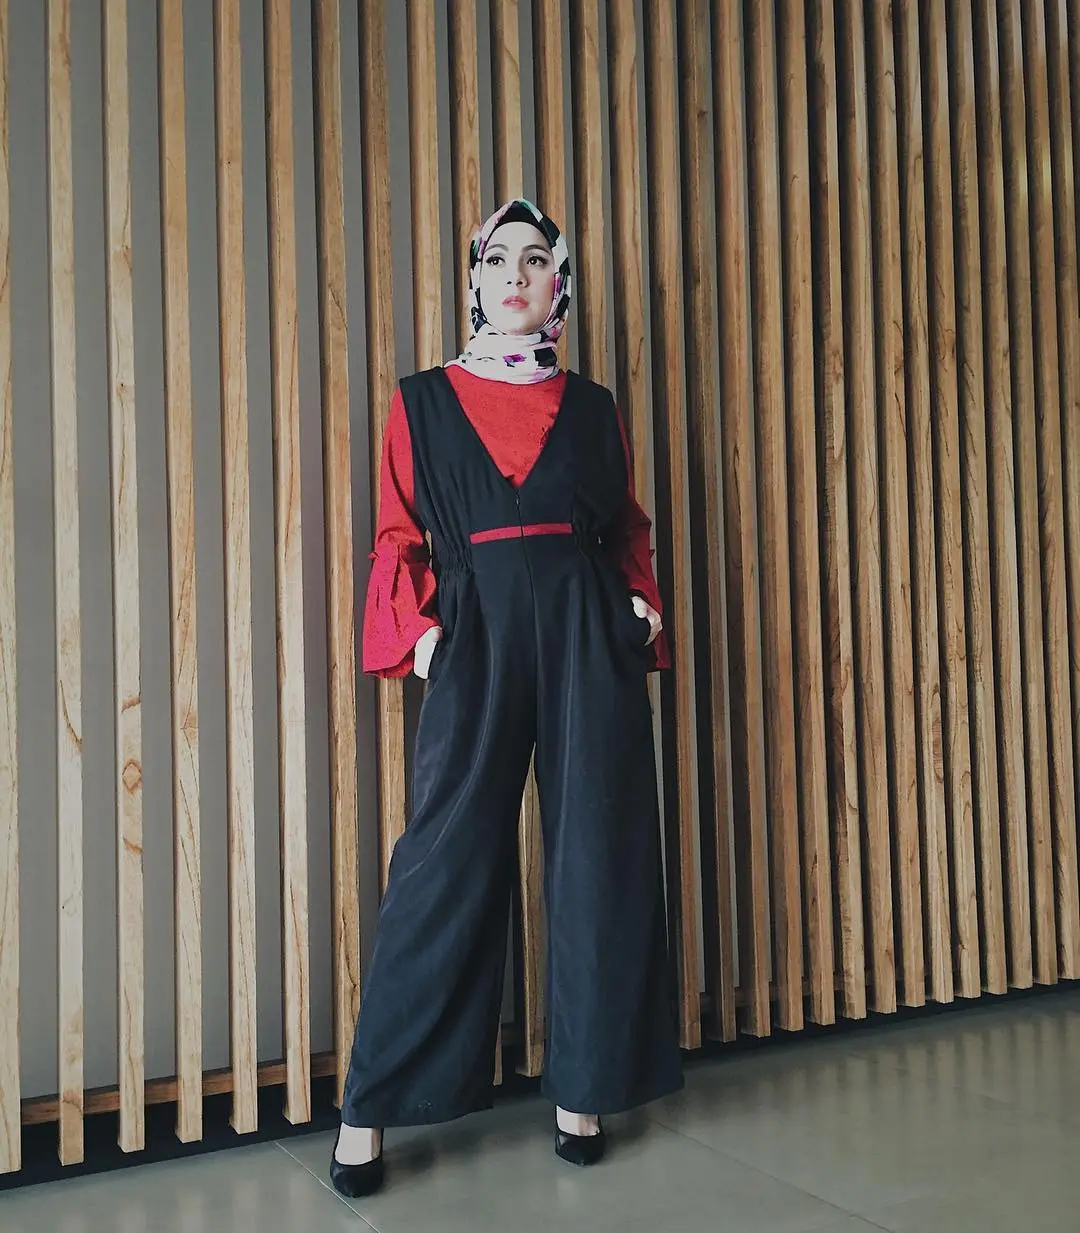 Mix and match hijab untuk busana kerja yang modis. (Image: missnyctagina/instagram)